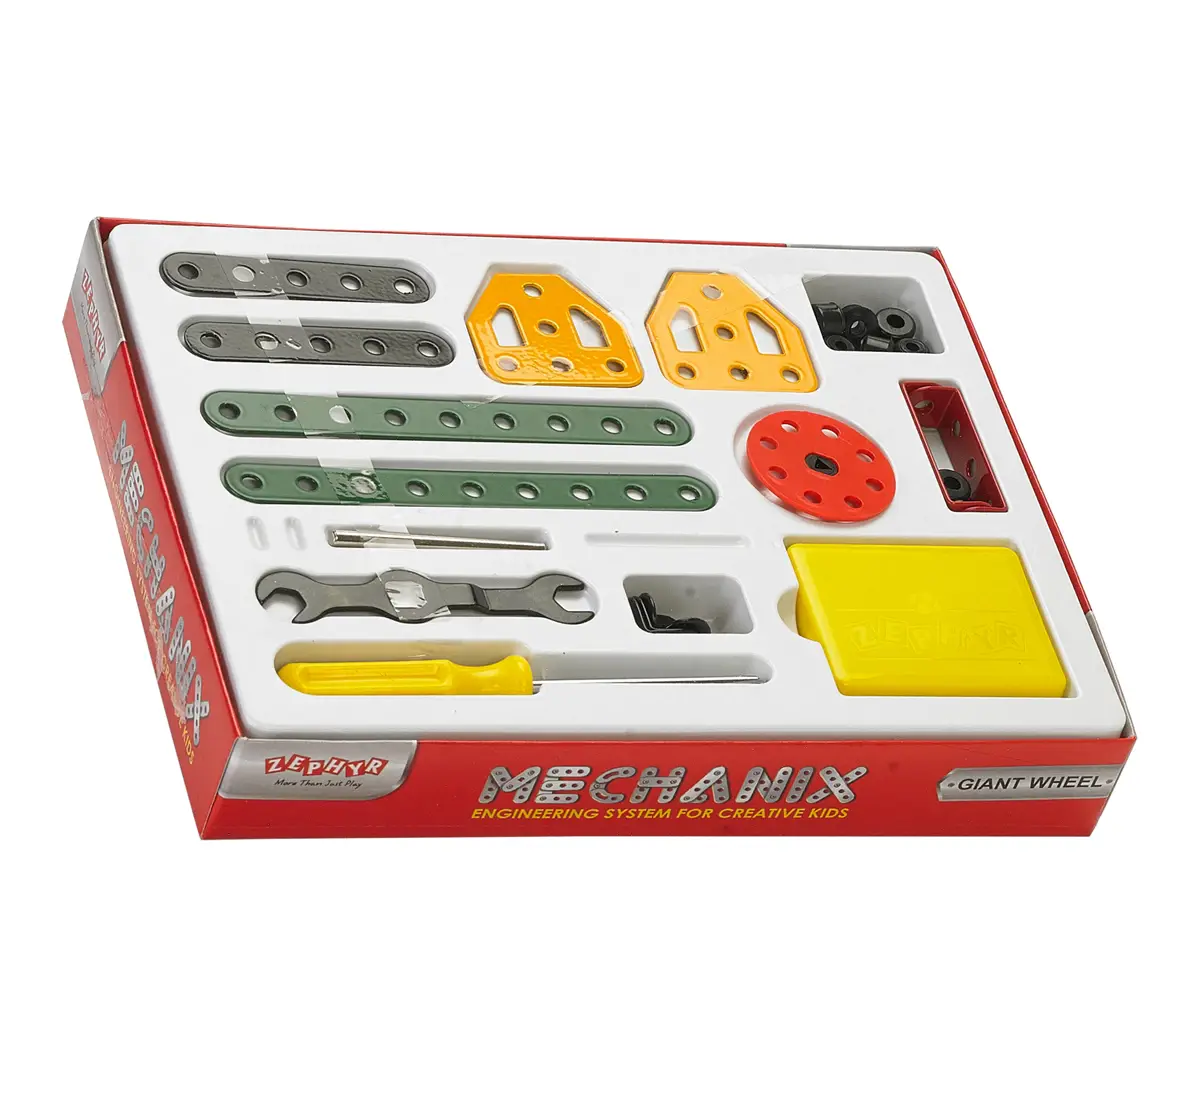 Mechanix Beginner Giant Wheel, Diy Stem And Education Metal Construction Set, For Boys & Girls, Multicolour, 7Y+